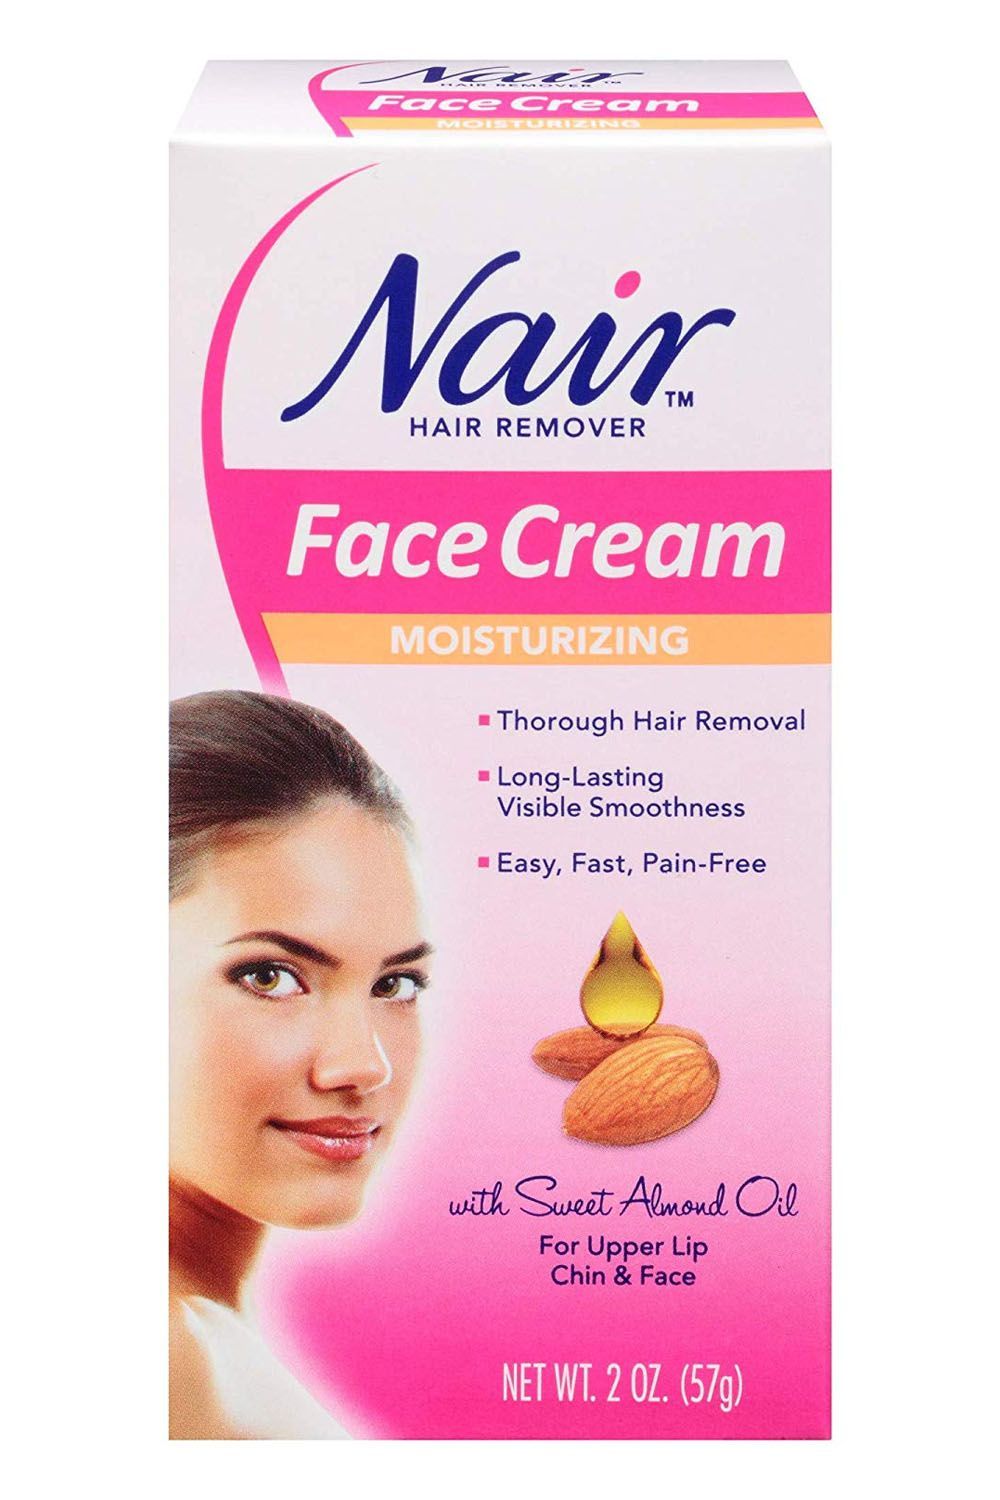 SSS Sensitive Skin Facial Hair Remover CreamSkin So SoftHair Removal CreamFacial Hair Removal CreamSensitive SkinUnscented